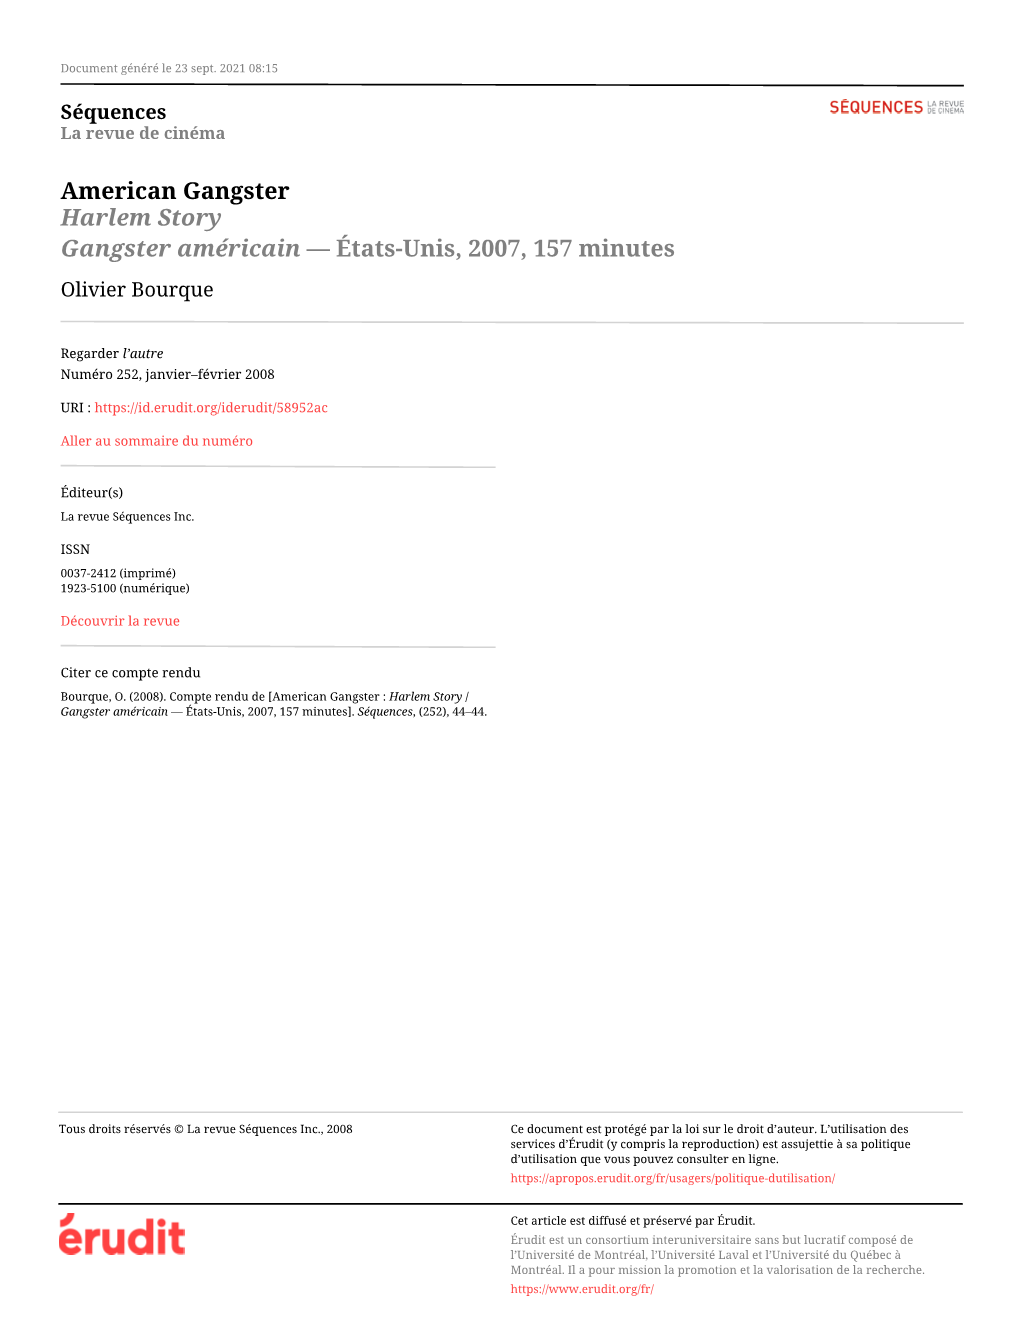 American Gangster : Harlem Story / Gangster Américain — États-Unis, 2007, 157 Minutes]